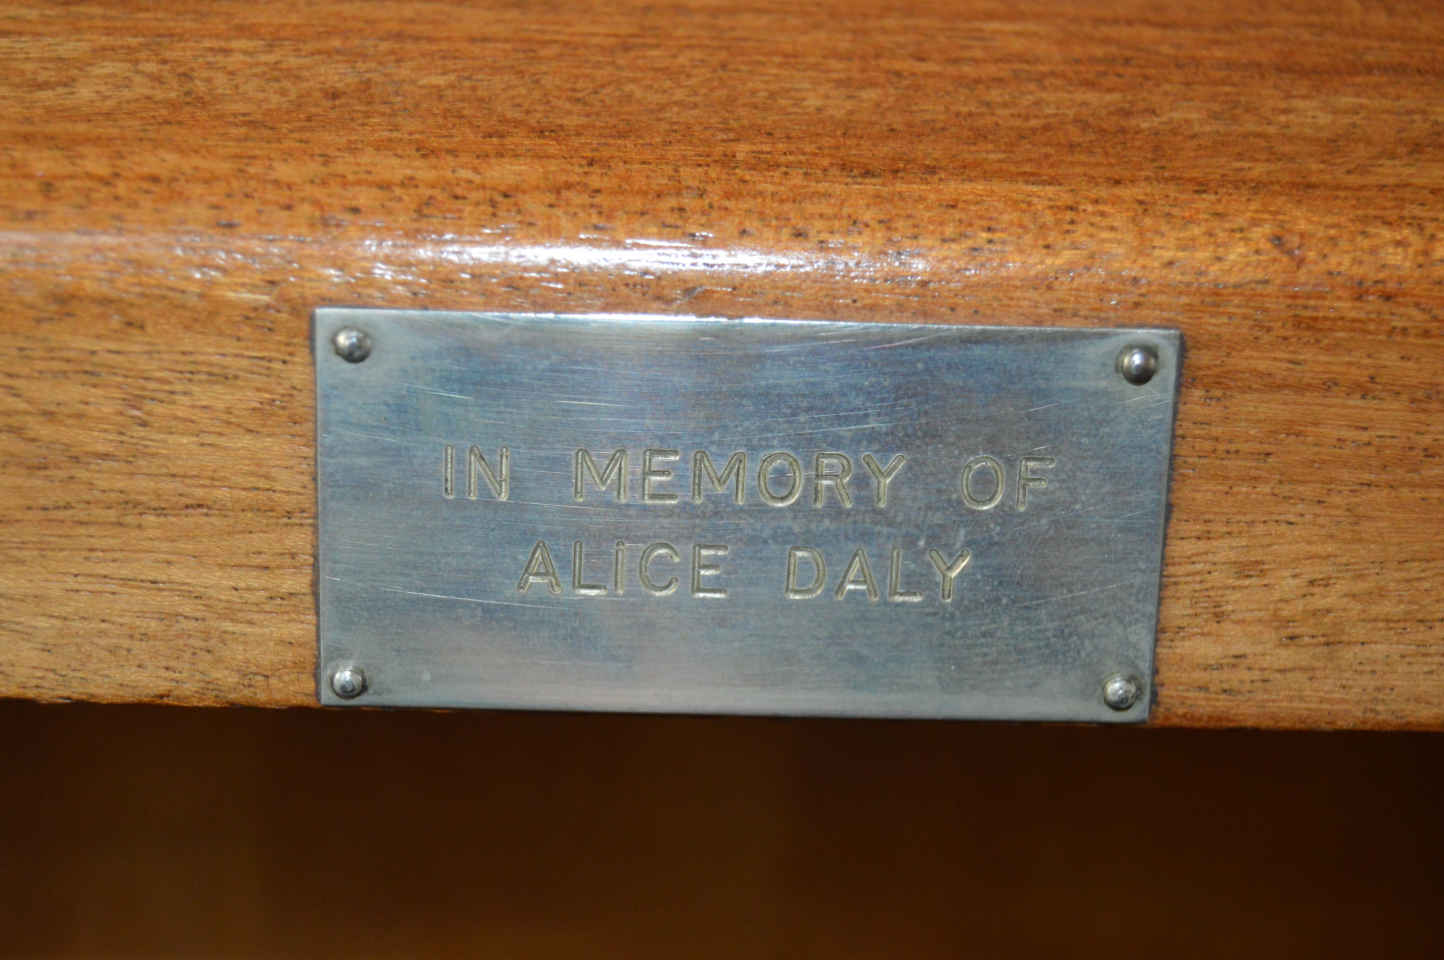 DALY Alice